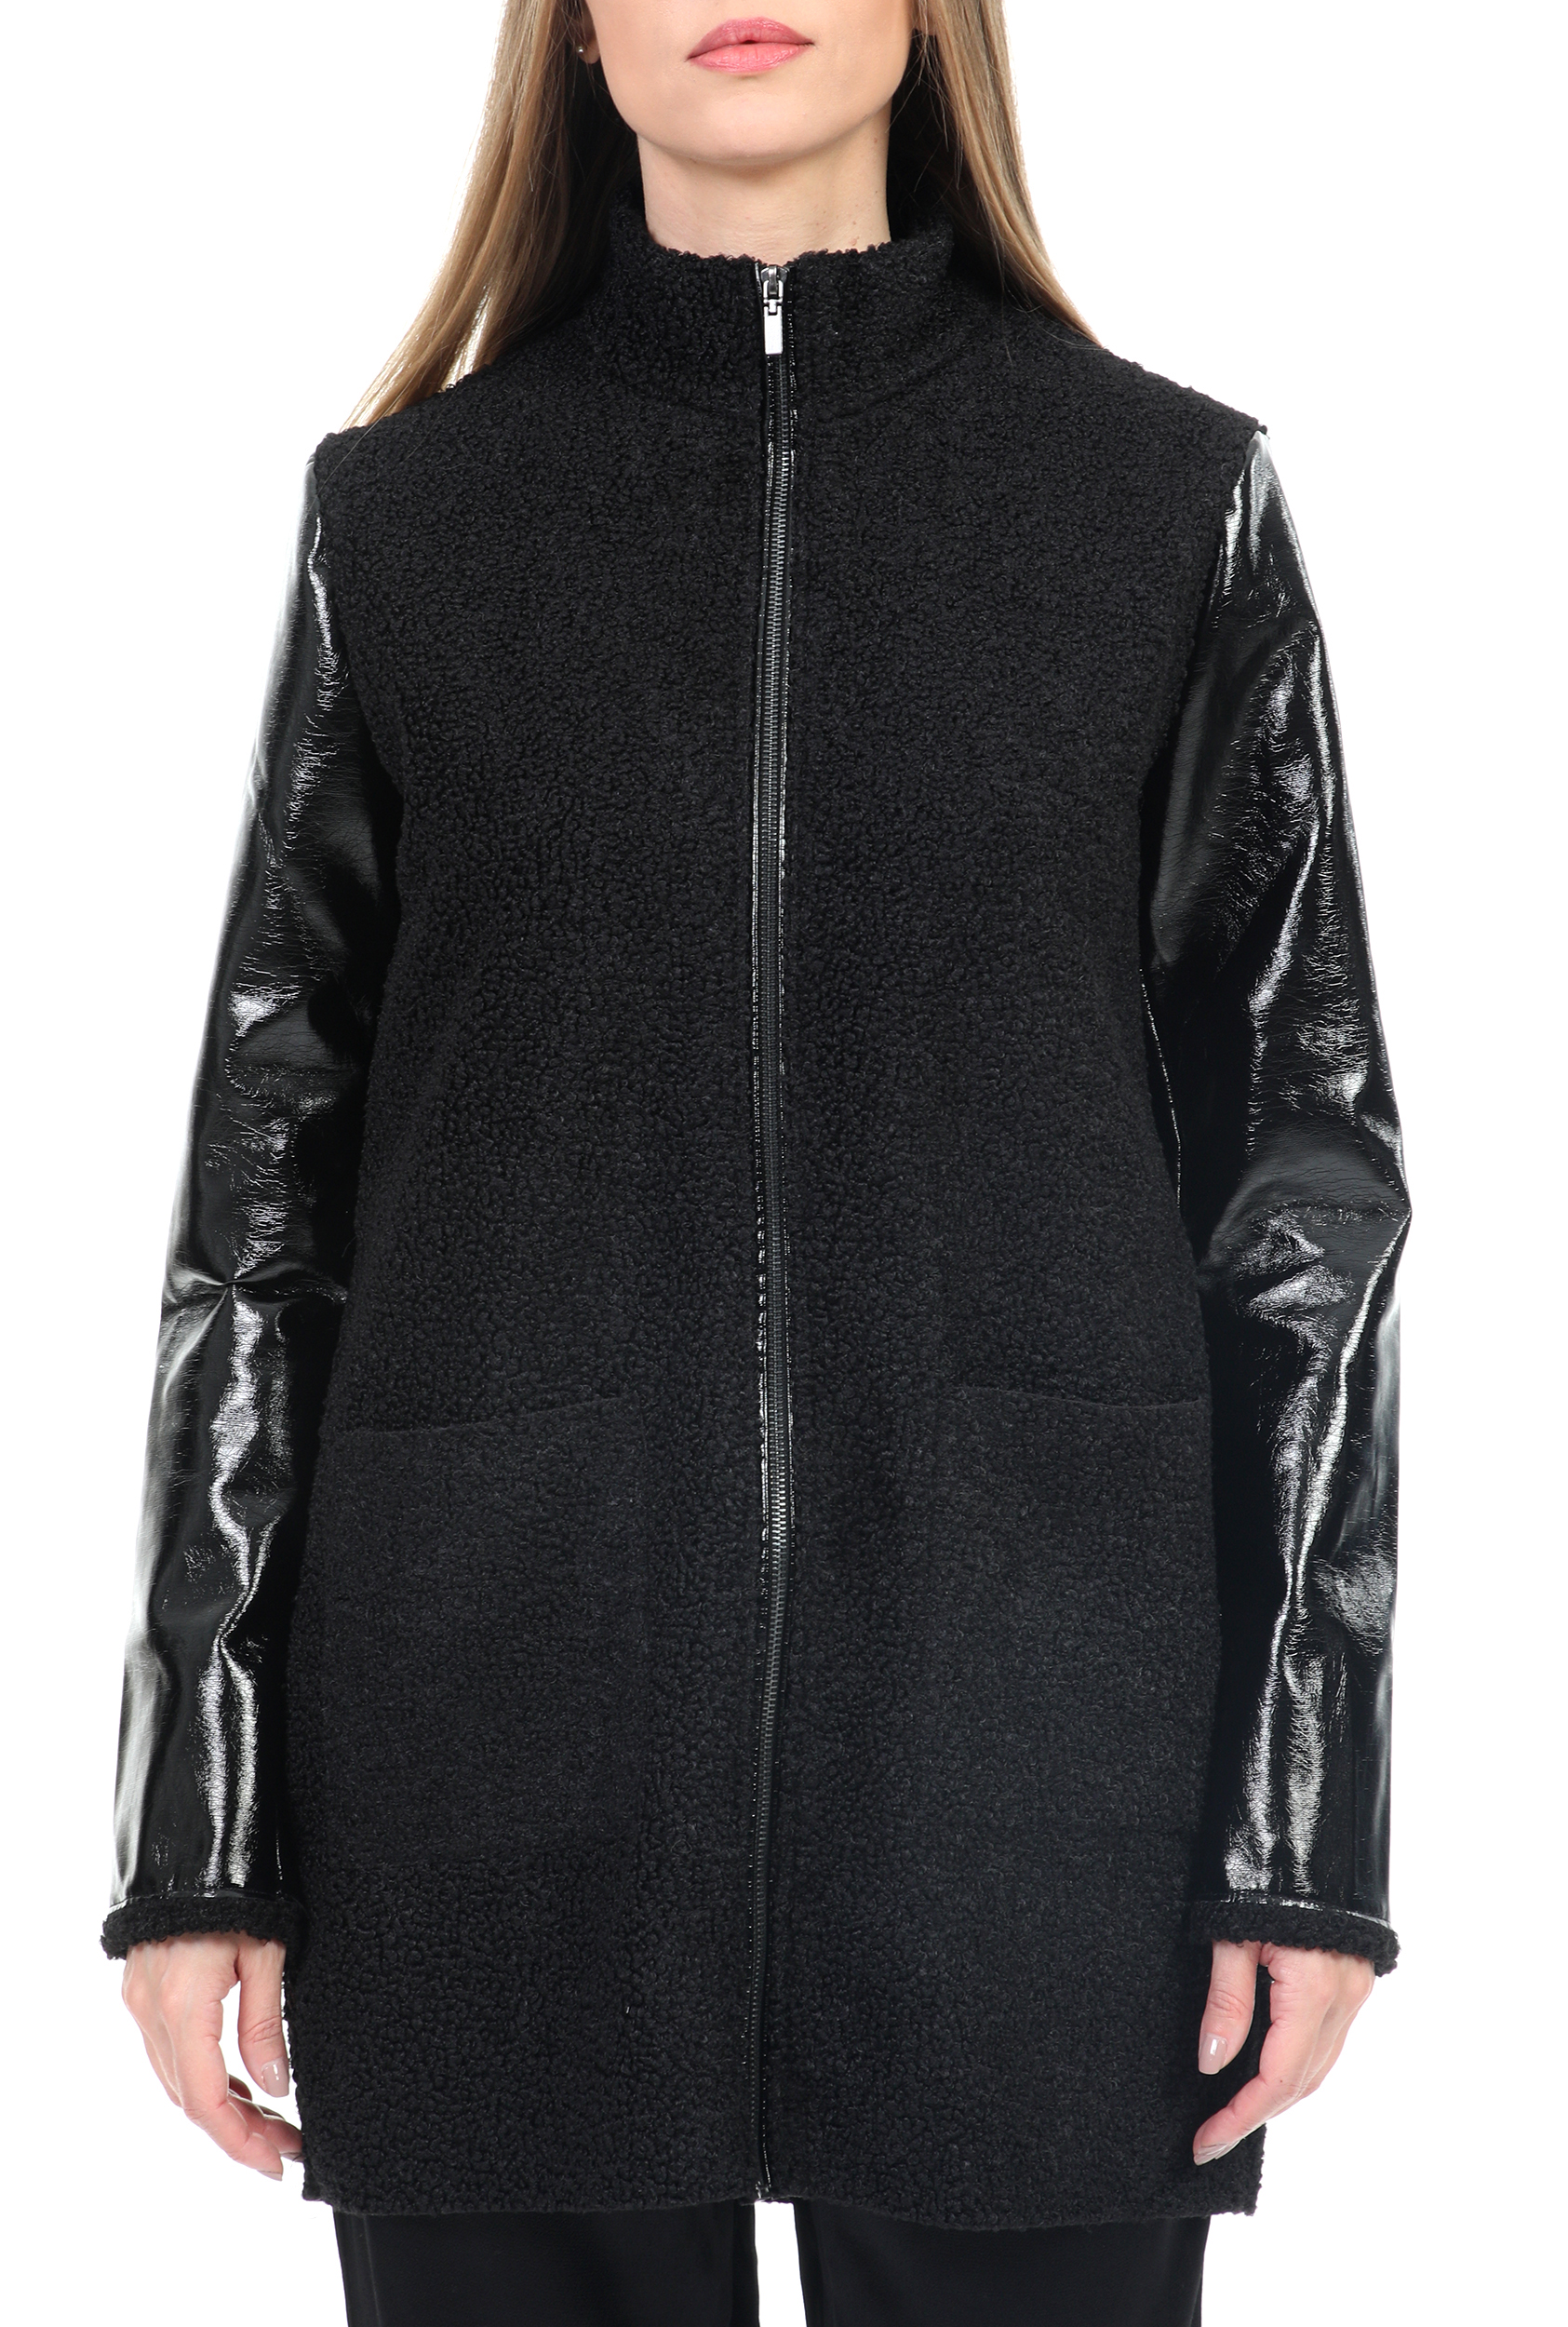 LA DOLLS – Γυναικείο jacket LA DOLLS MORITZ μαύρο 1802368.0-0071